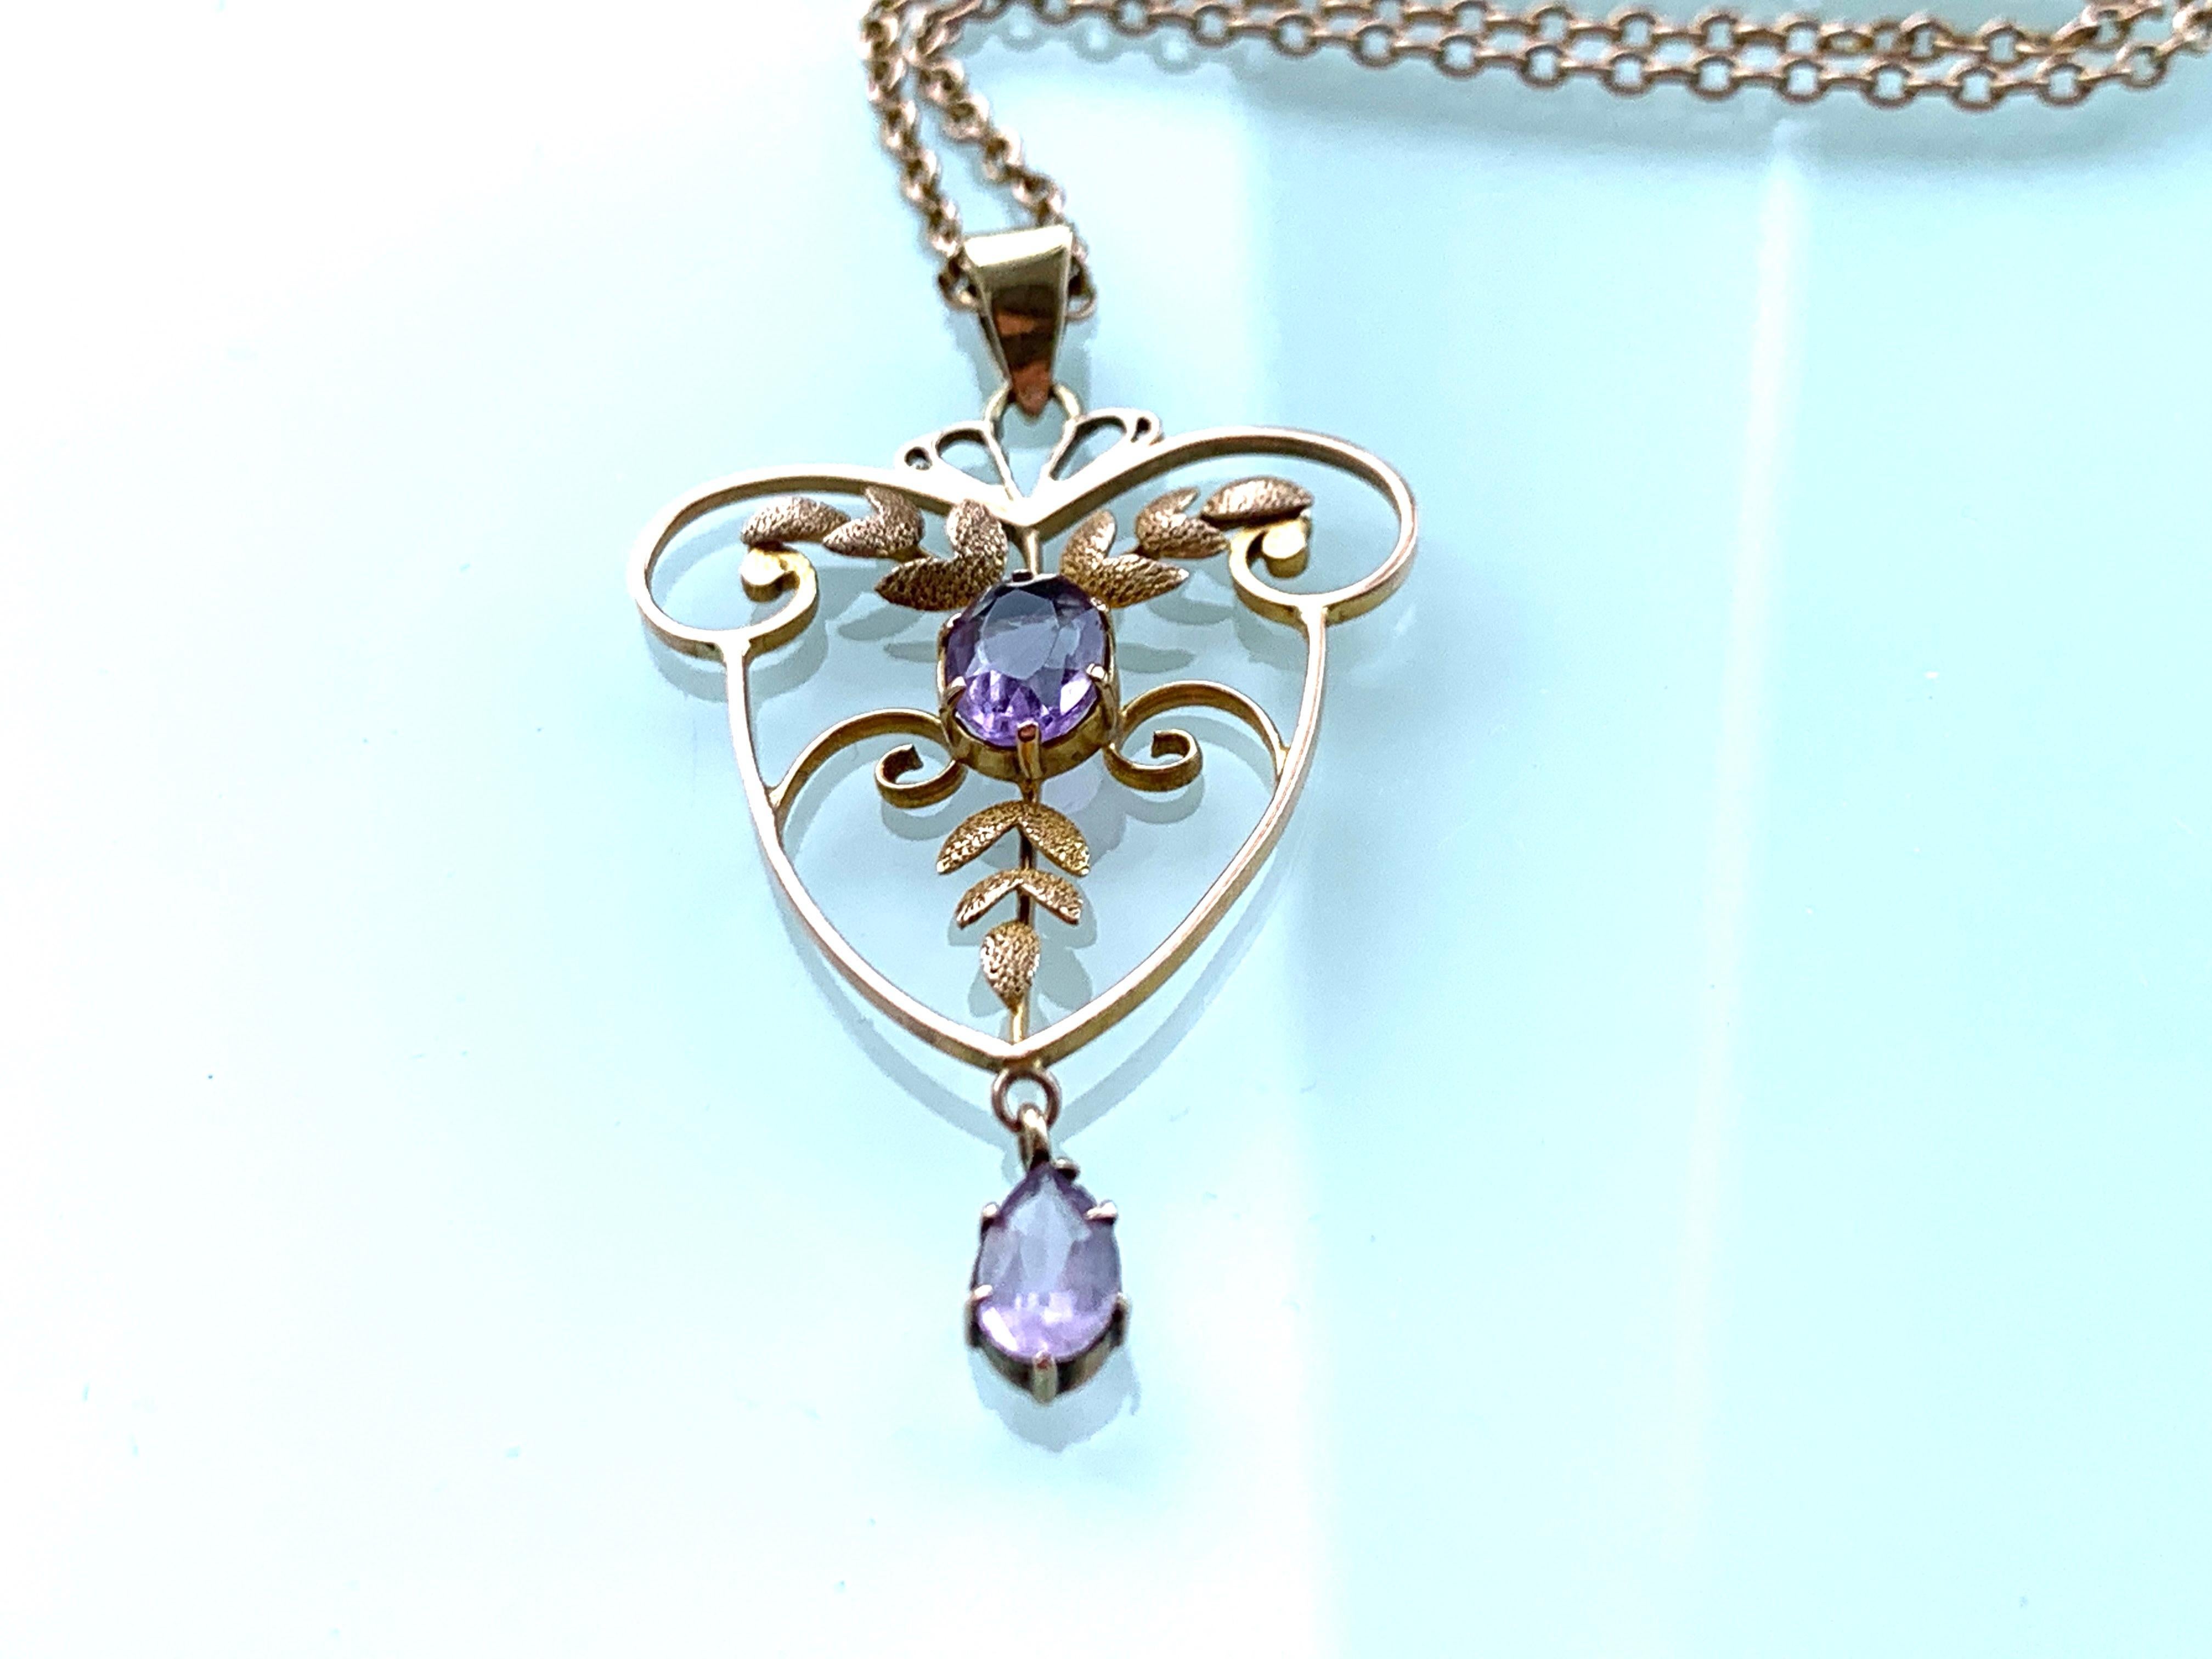 Beautiful antique necklace
( Pendant & chain ) 
Victorian floral design 
9ct rose gold 
with amethyst gemstones
Pendant Size  : 4.5cm  x 2.75cm x 1mm
Chain Length : 16